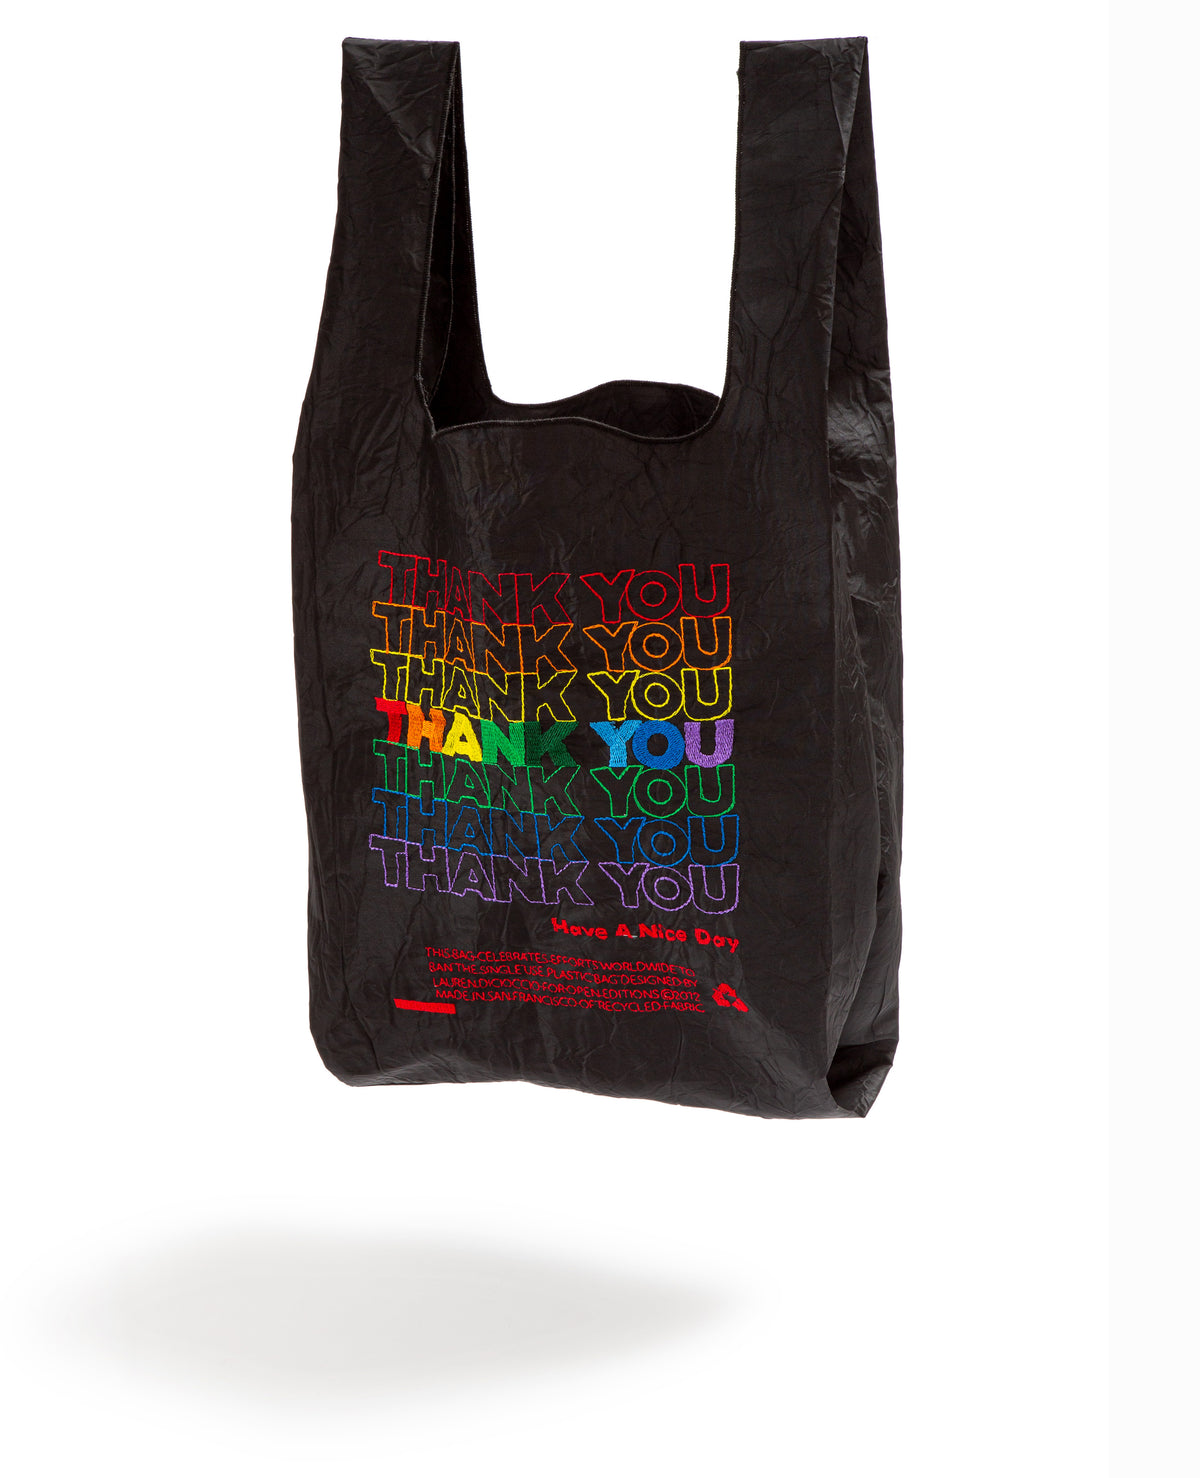 Rainbow Tote Bag – Church of the Cosmic Skull